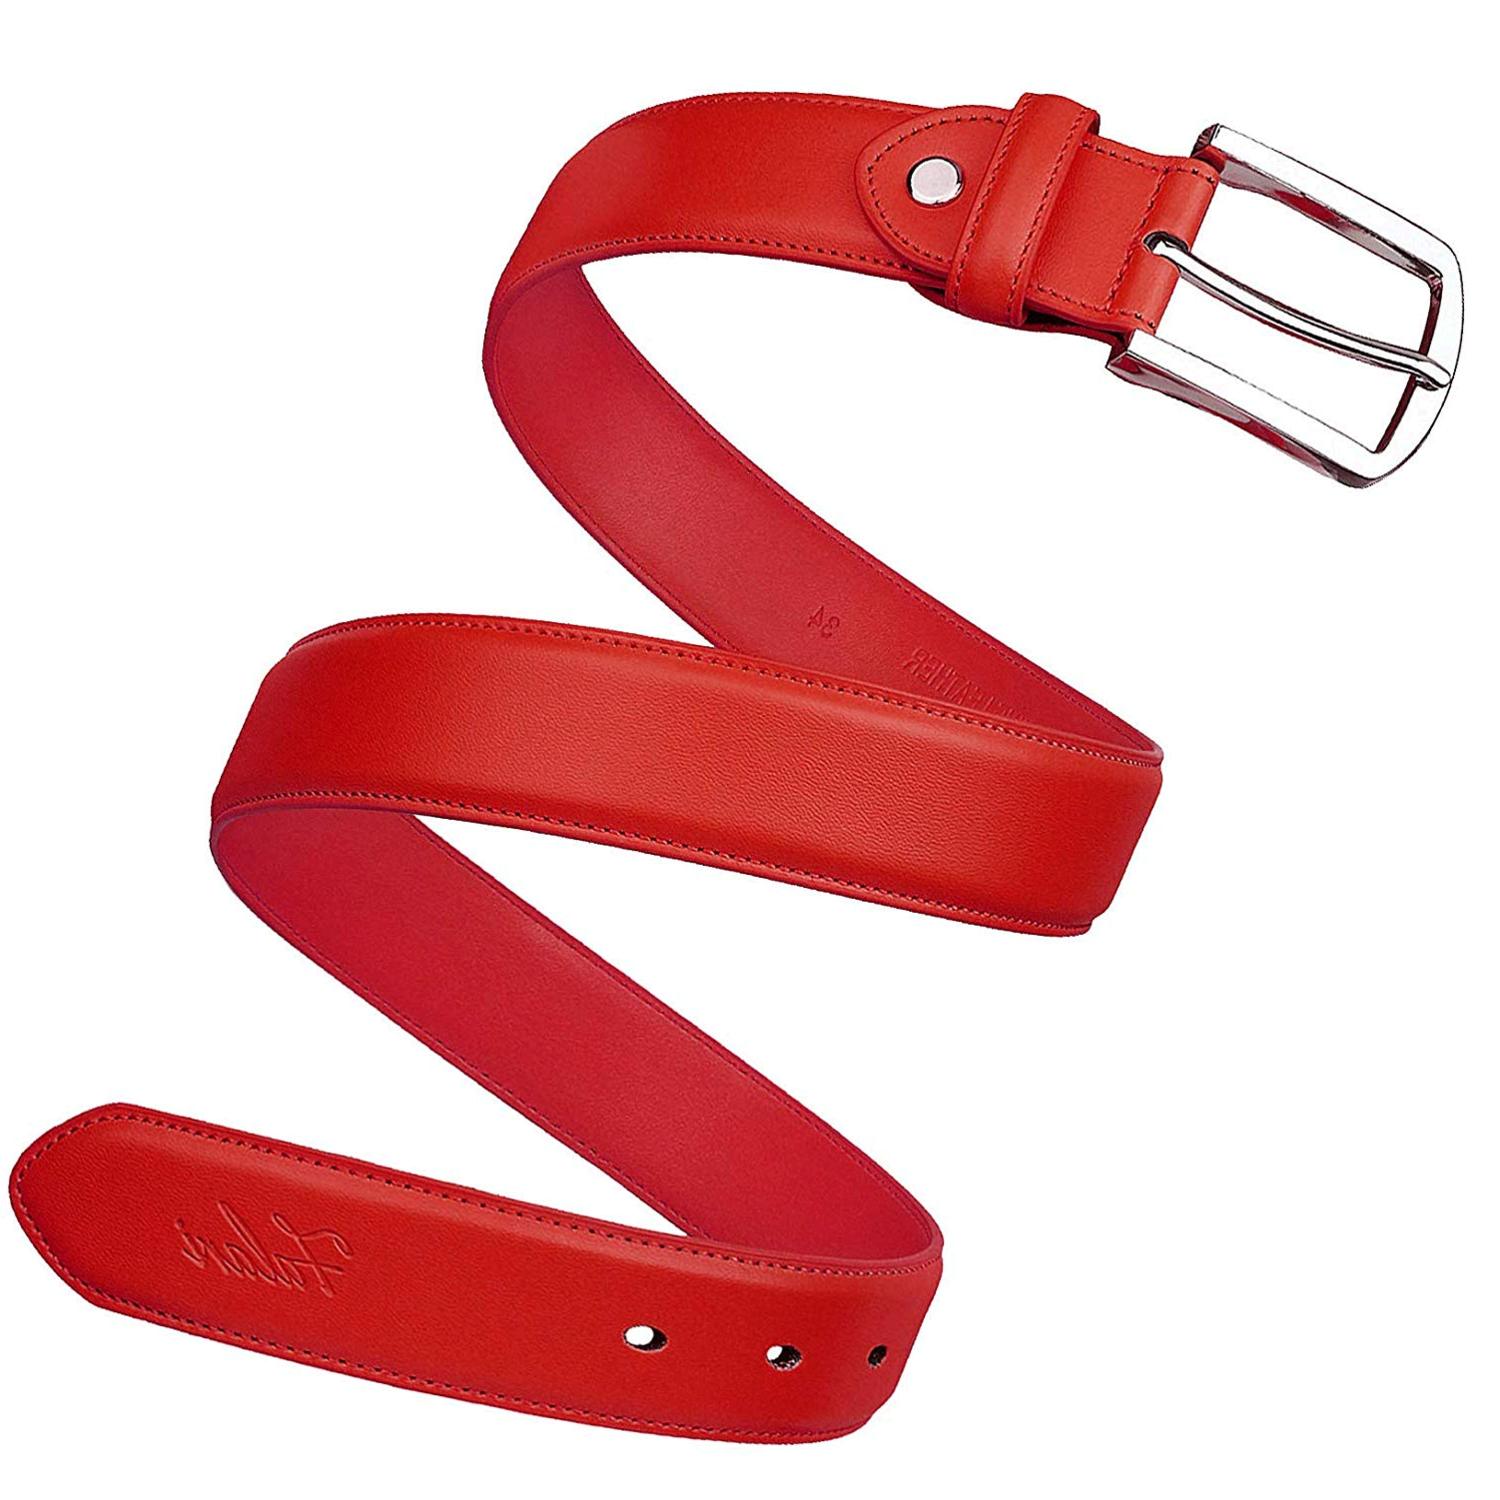 Falari Men Genuine Leather Casual Dress Belt With, Red, Size 36 (waist 34) 0V9y | eBay